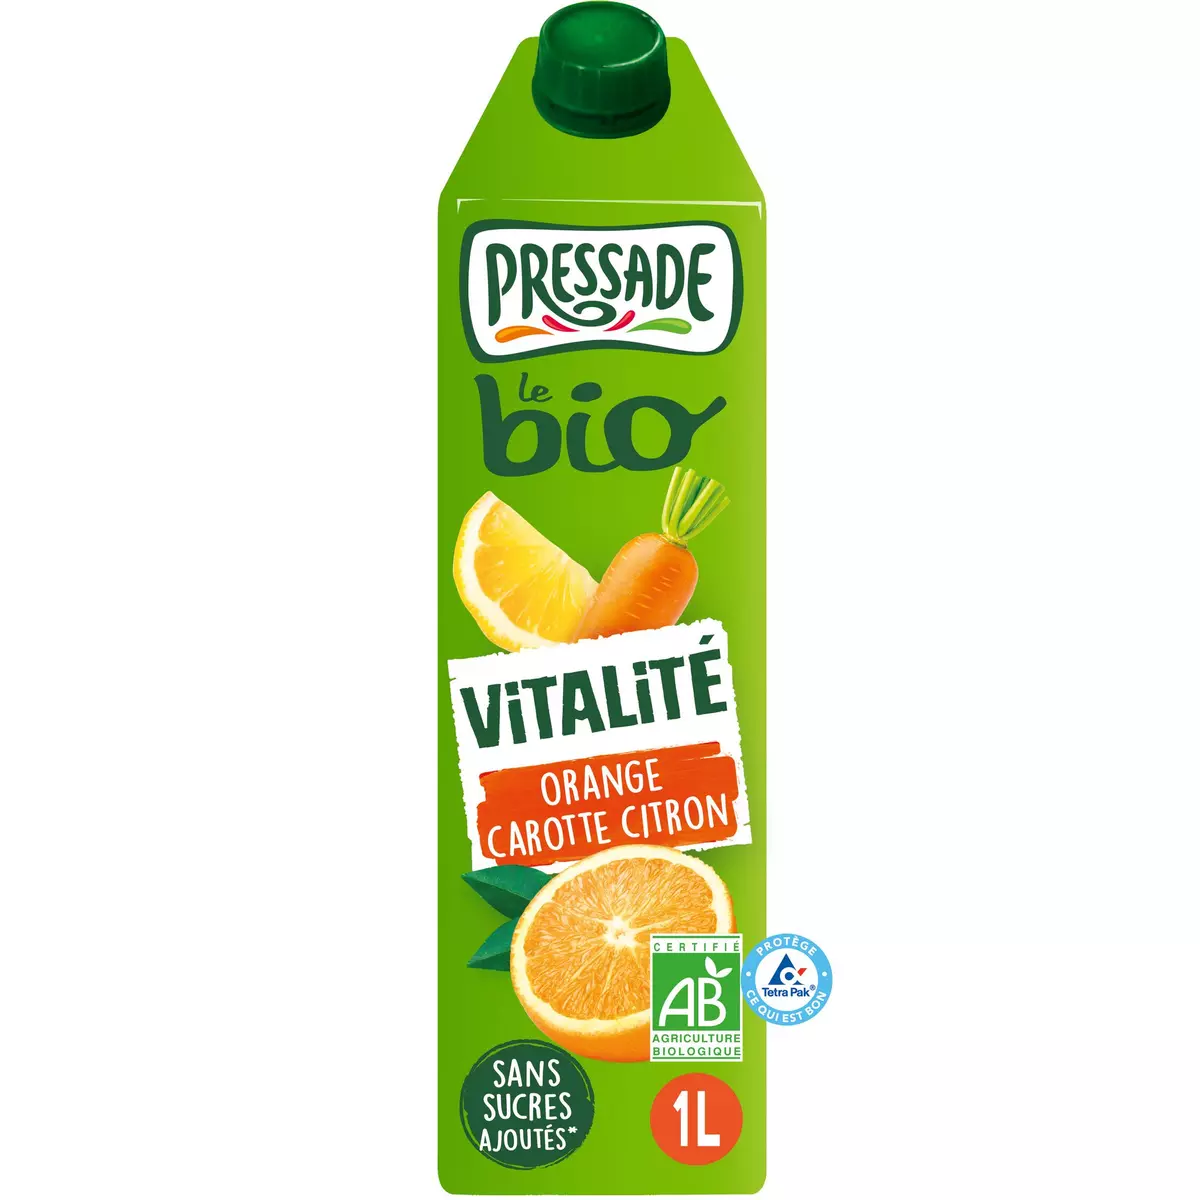 PRESSADE Nectar d'orange carotte citron bio Vitalité 1l